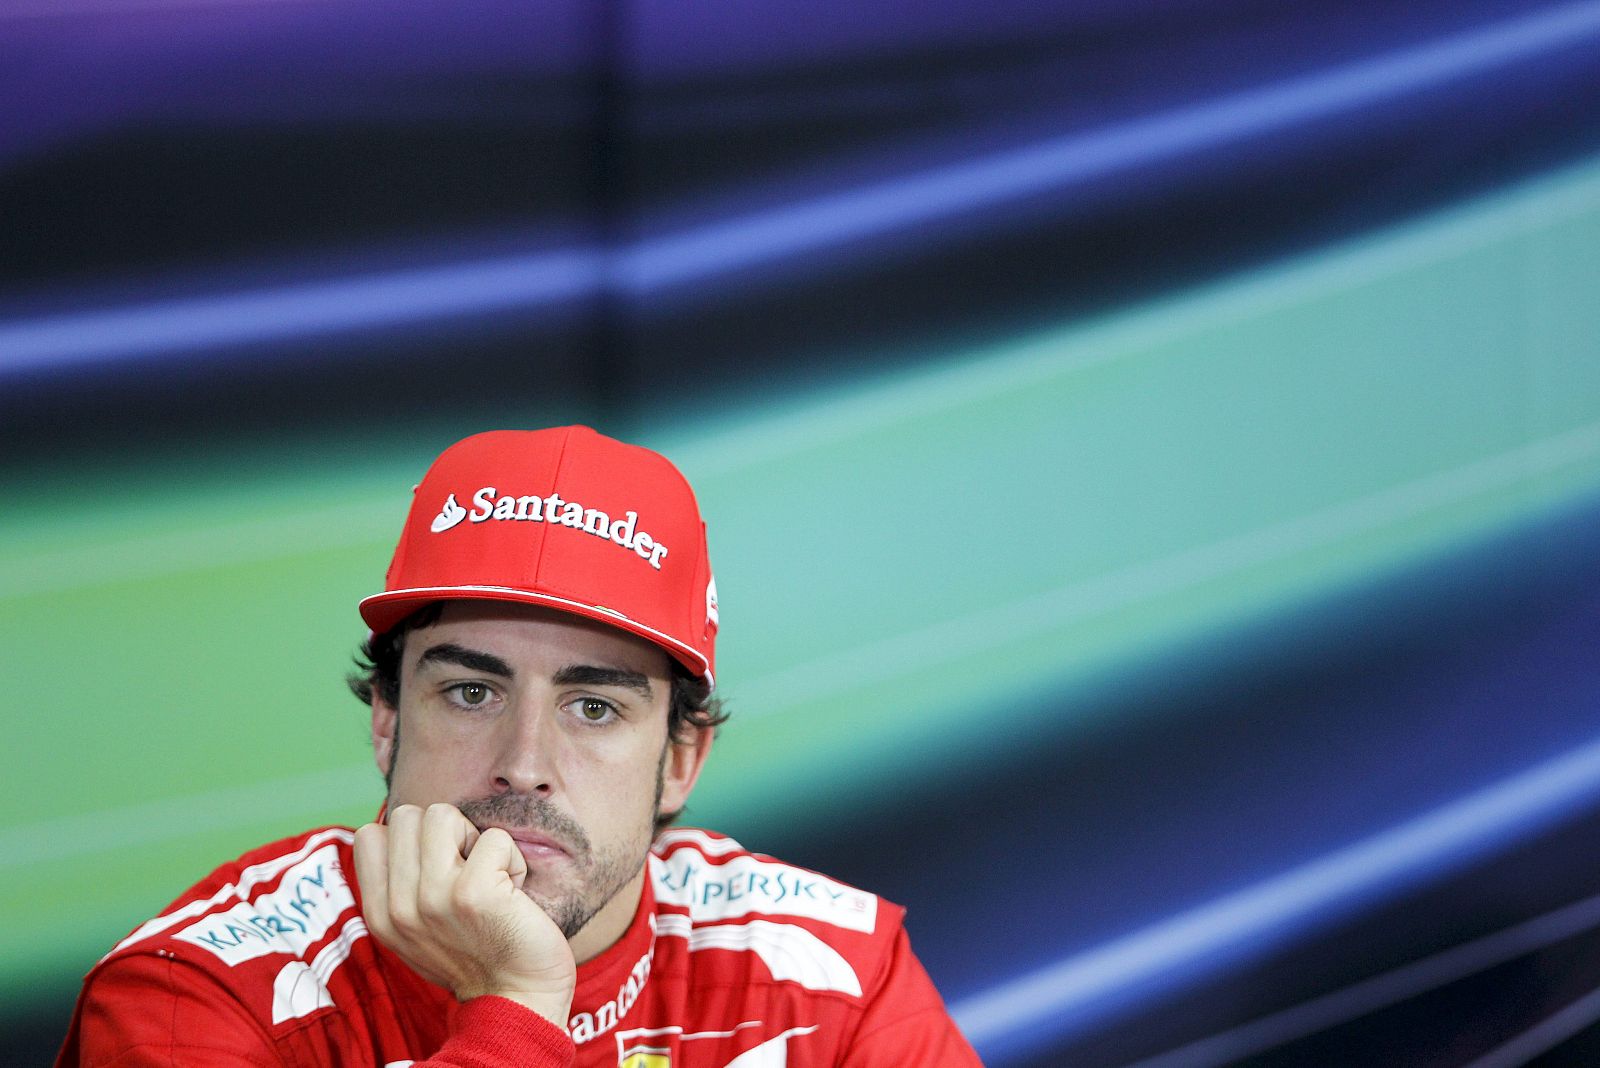 El piloto español de Ferrari, Fernando Alonso